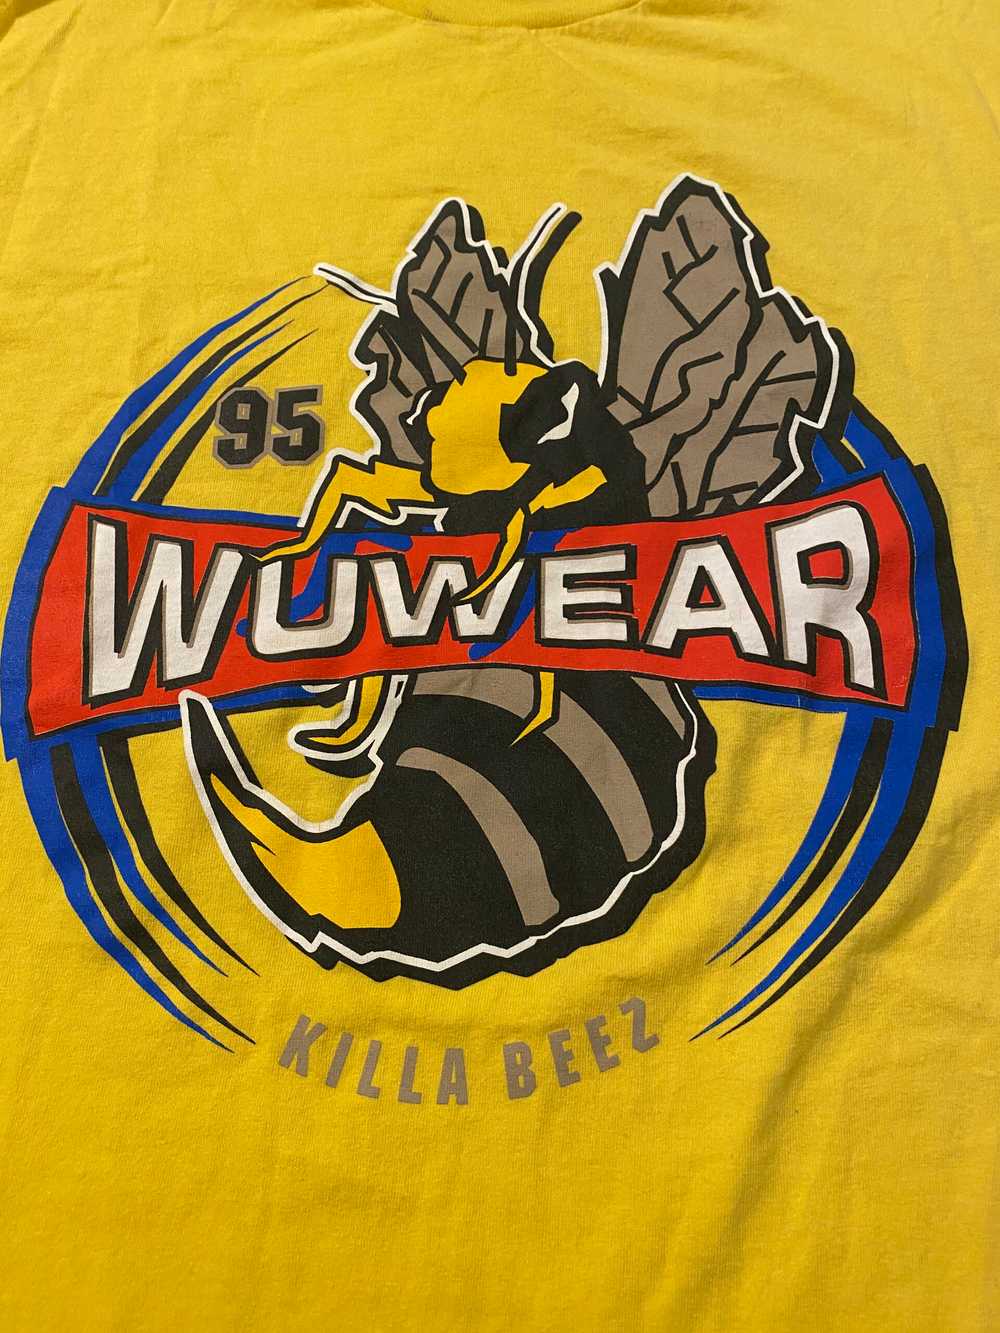 1995 Wu Wear Vintage Shirt - image 2